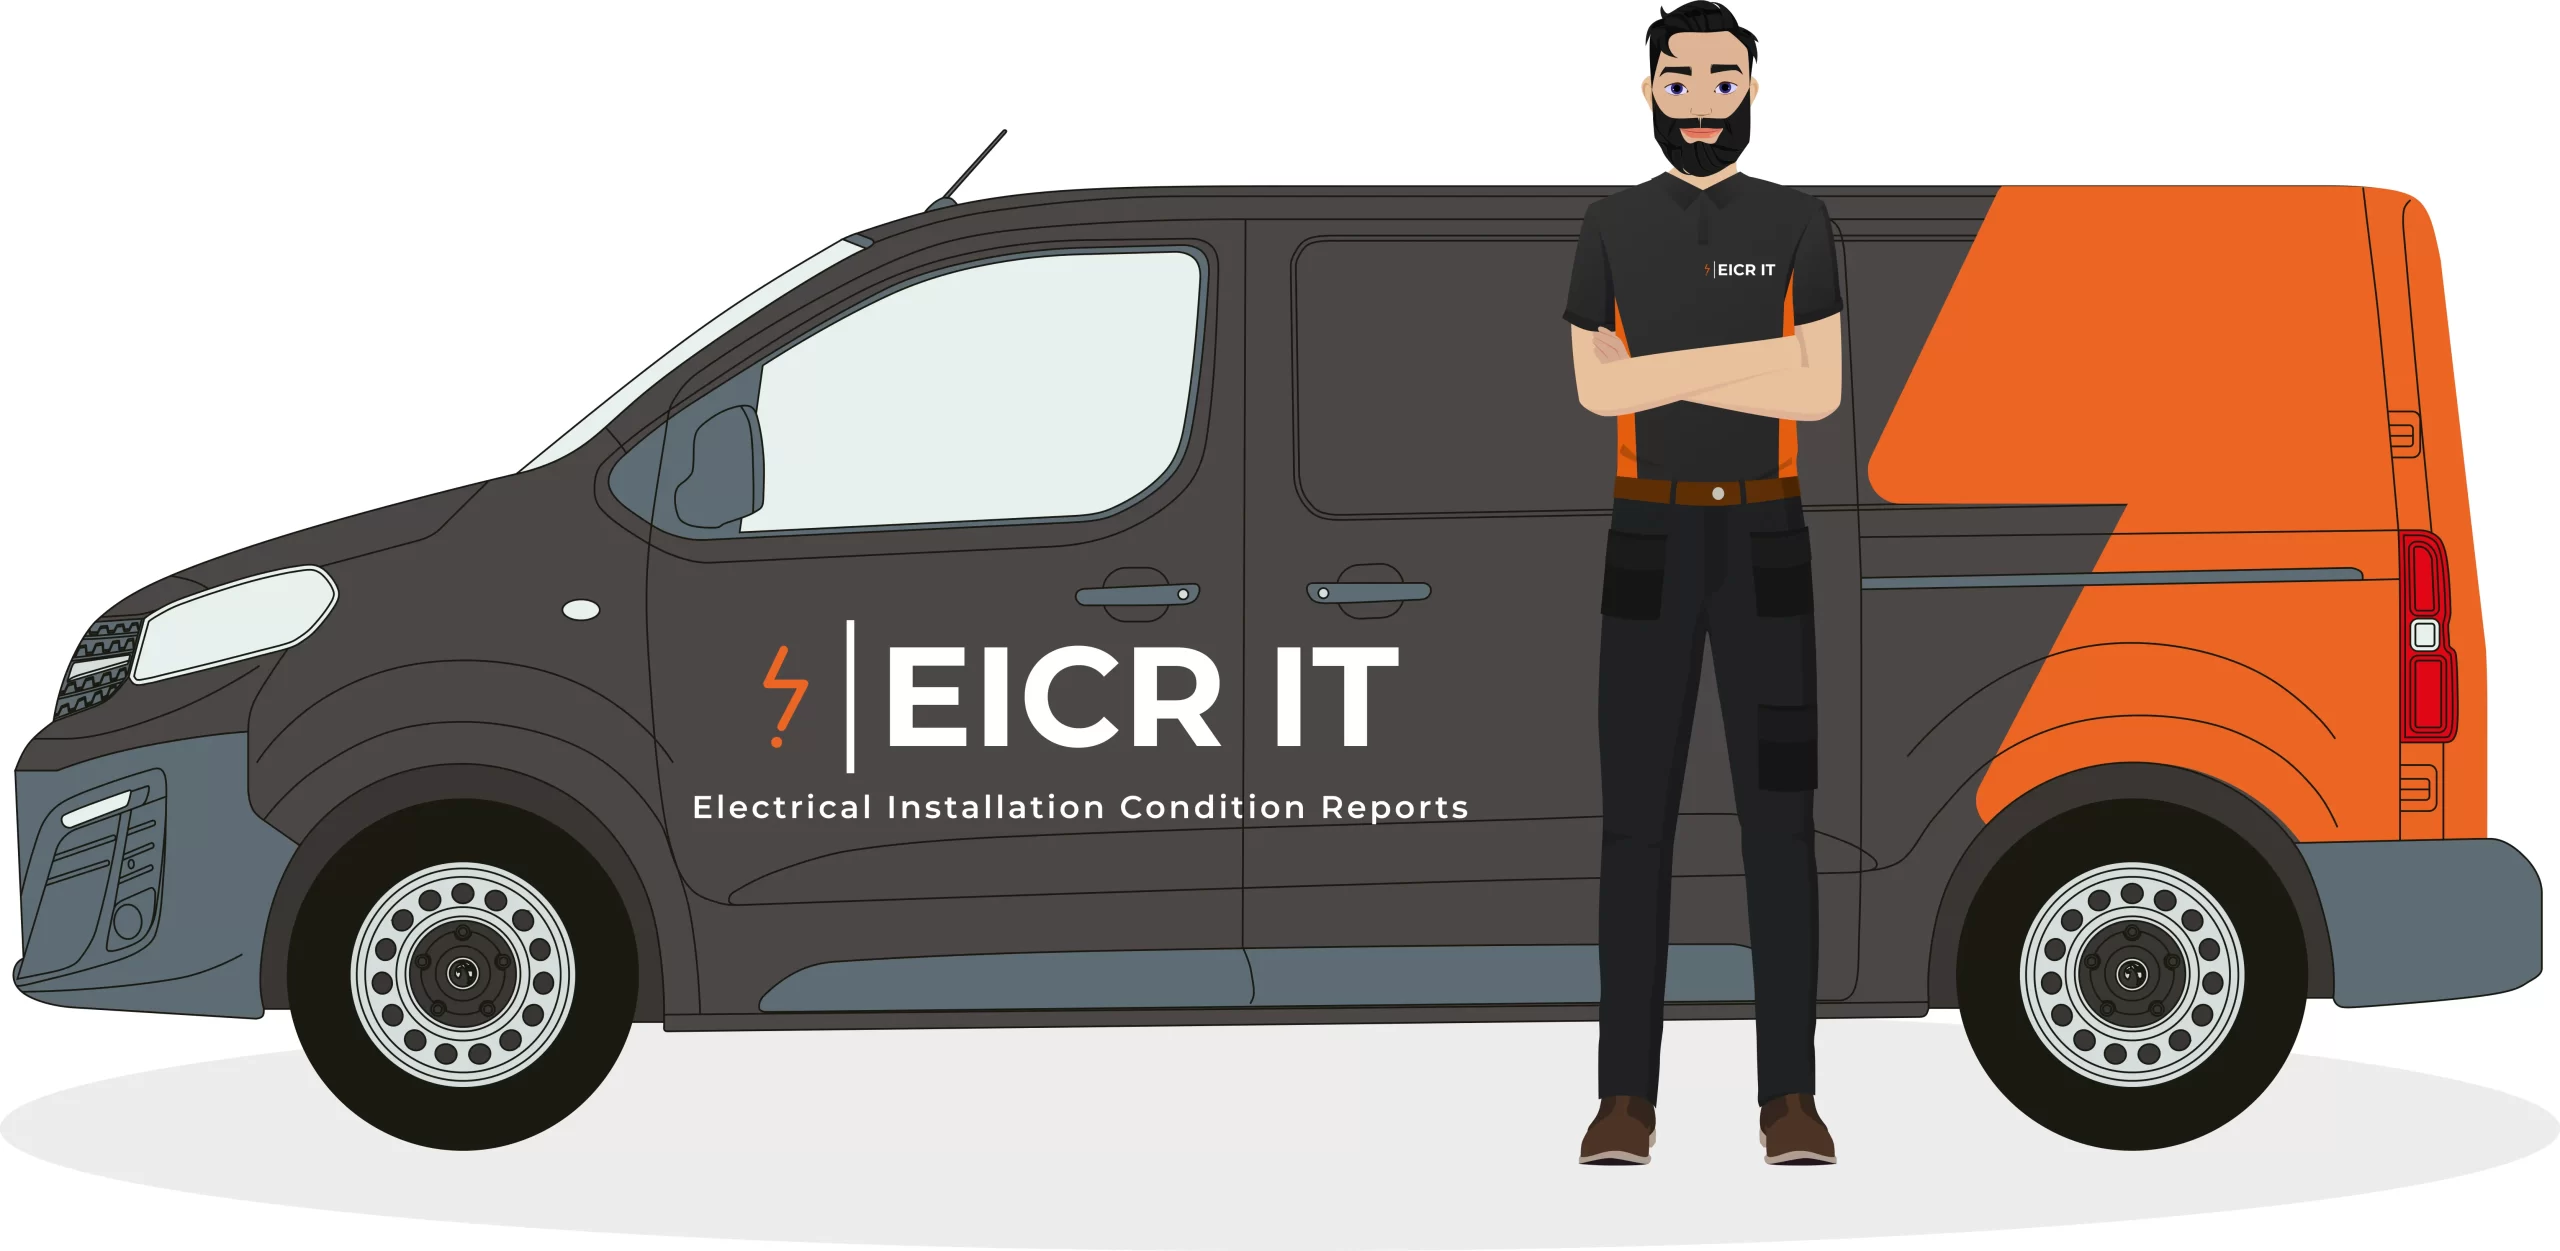 EICR-Character-and-Van-Illustration_RGB